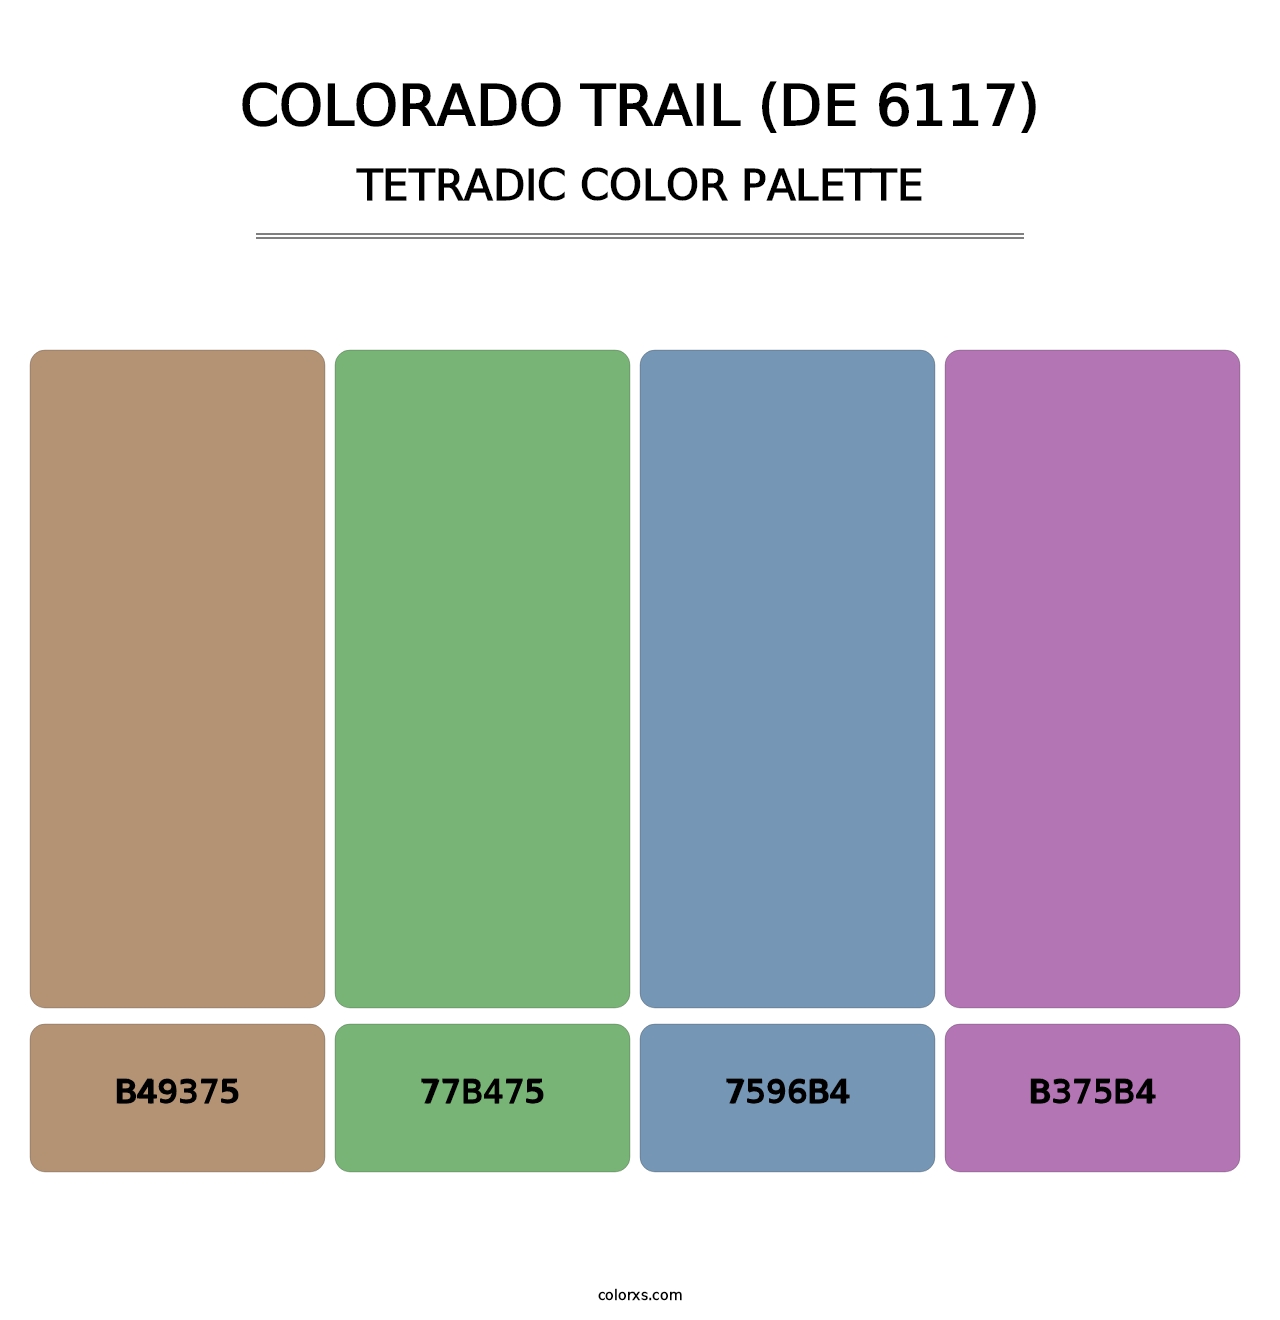 Colorado Trail (DE 6117) - Tetradic Color Palette